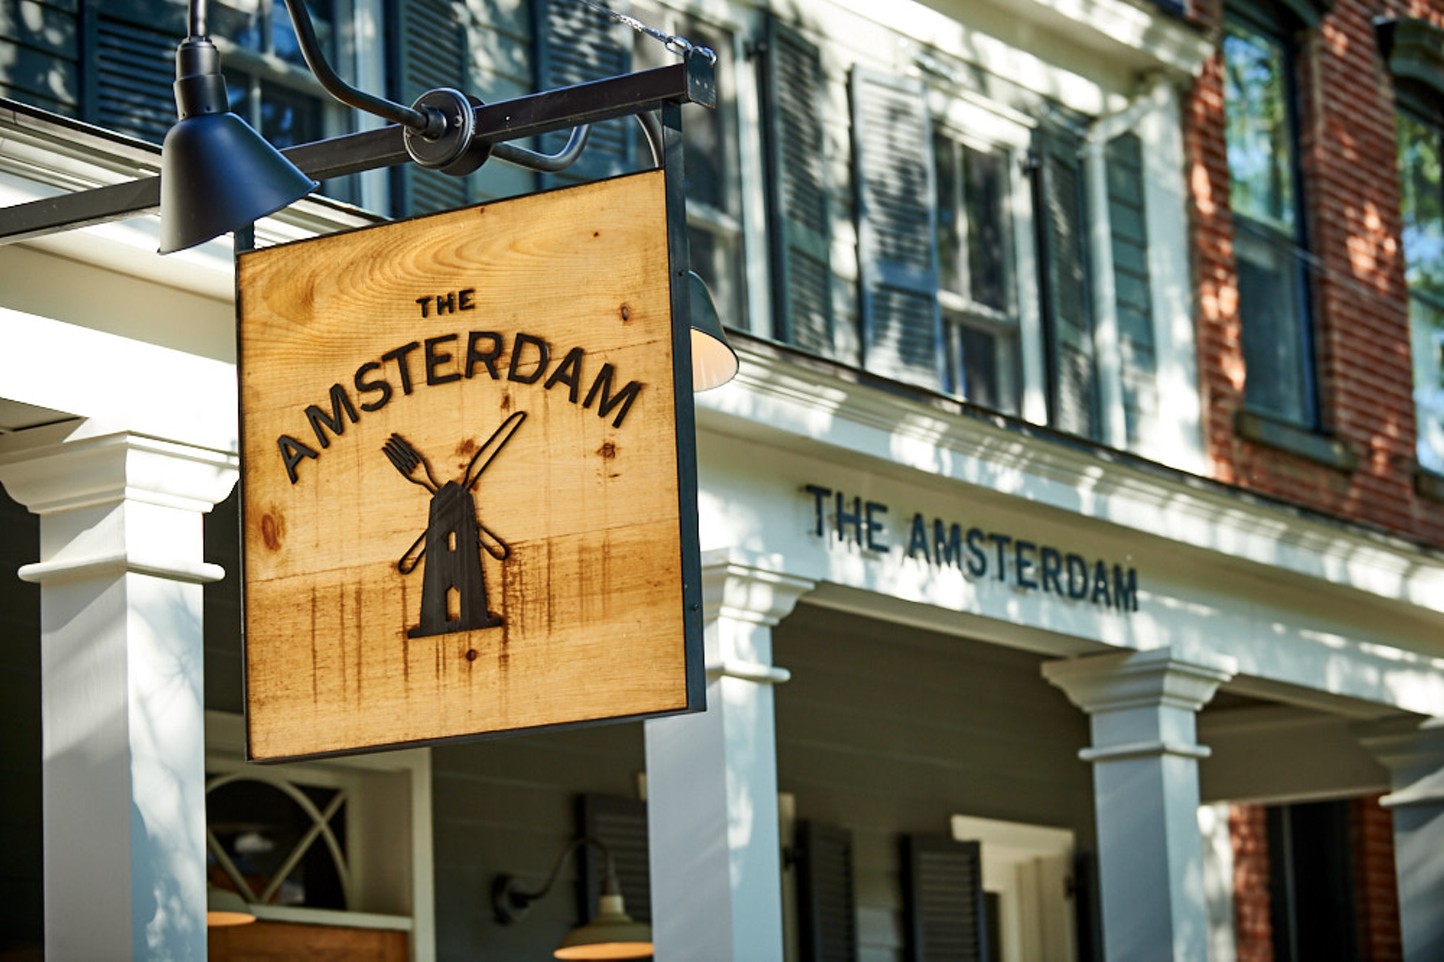 The Amsterdam